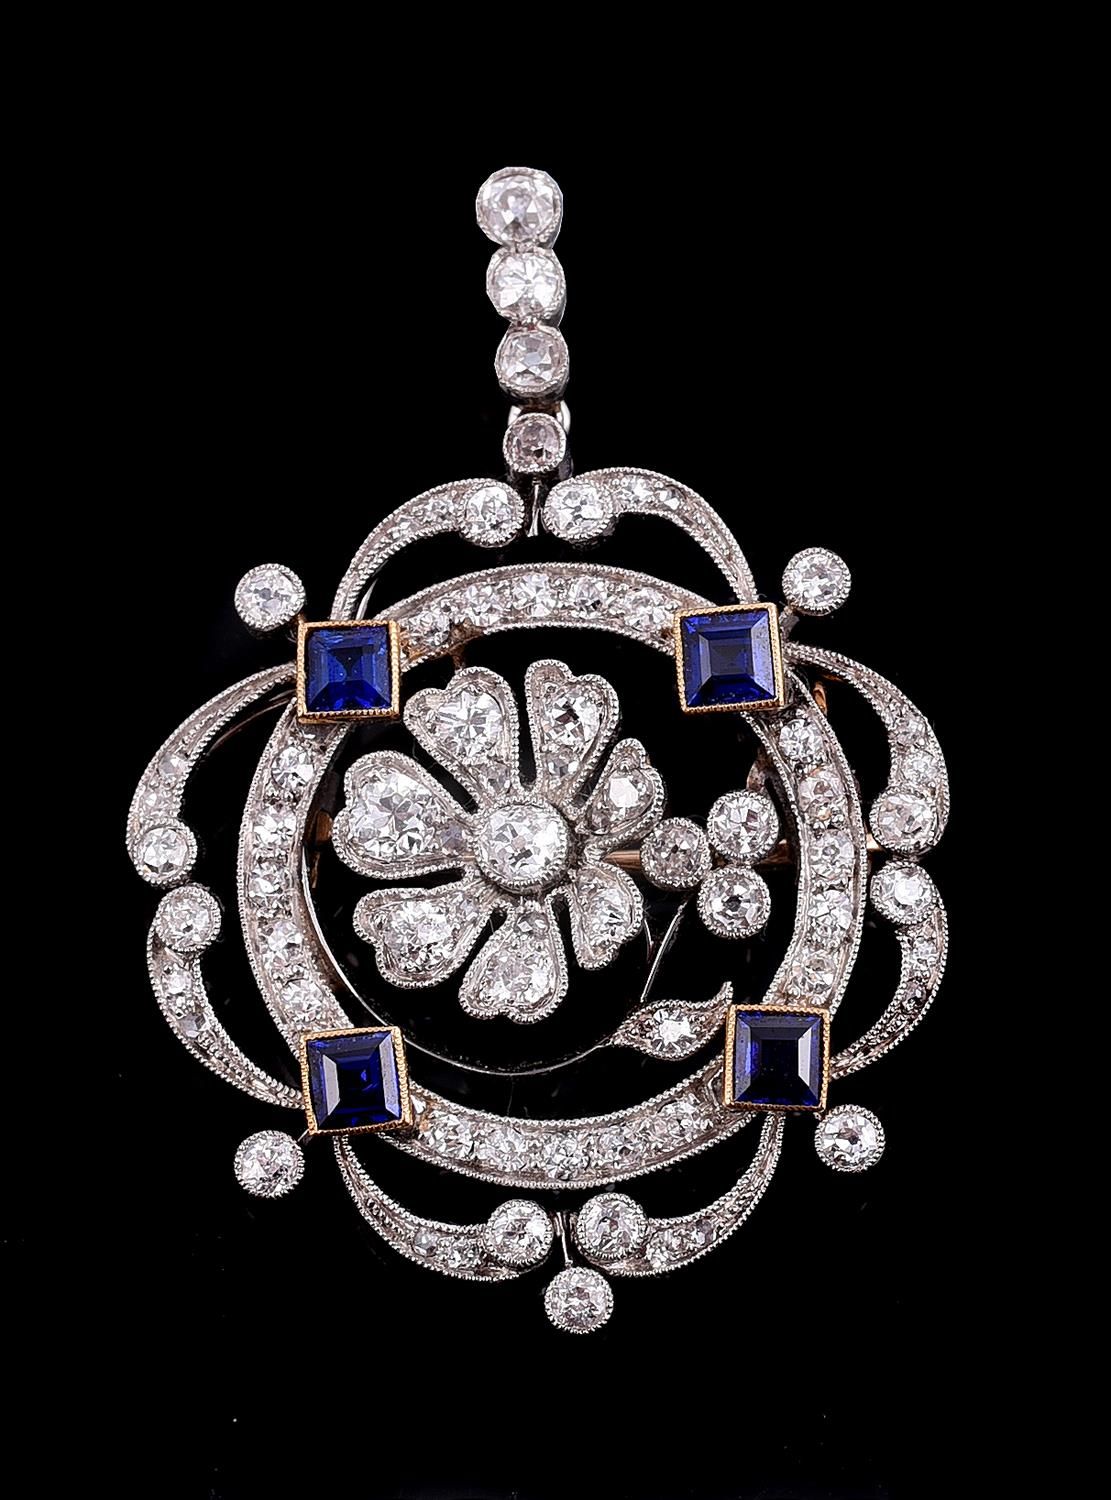 An Edwardian diamond and sapphire brooch/pendant Un diamante edoardiano e zaffir&hellip;